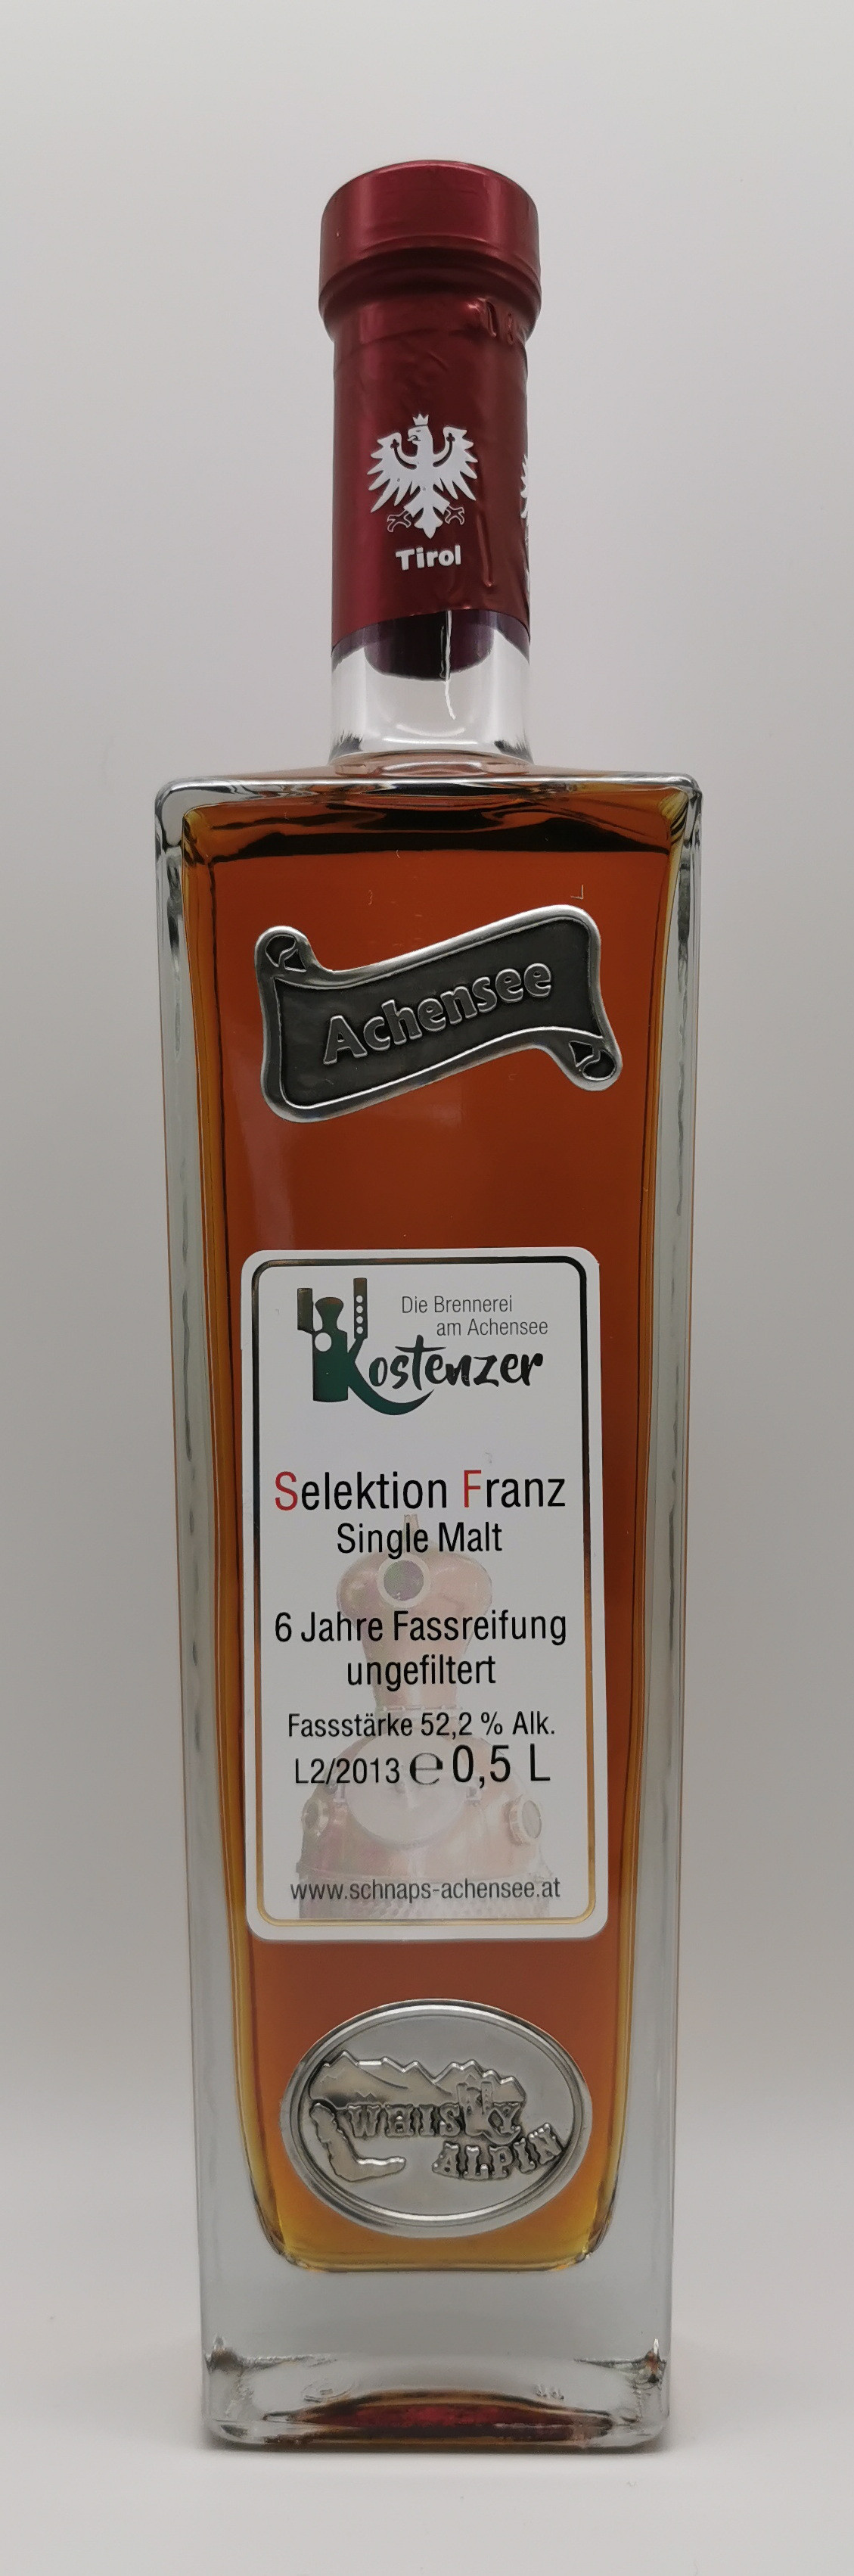 Single Malt "Selektion Franz"